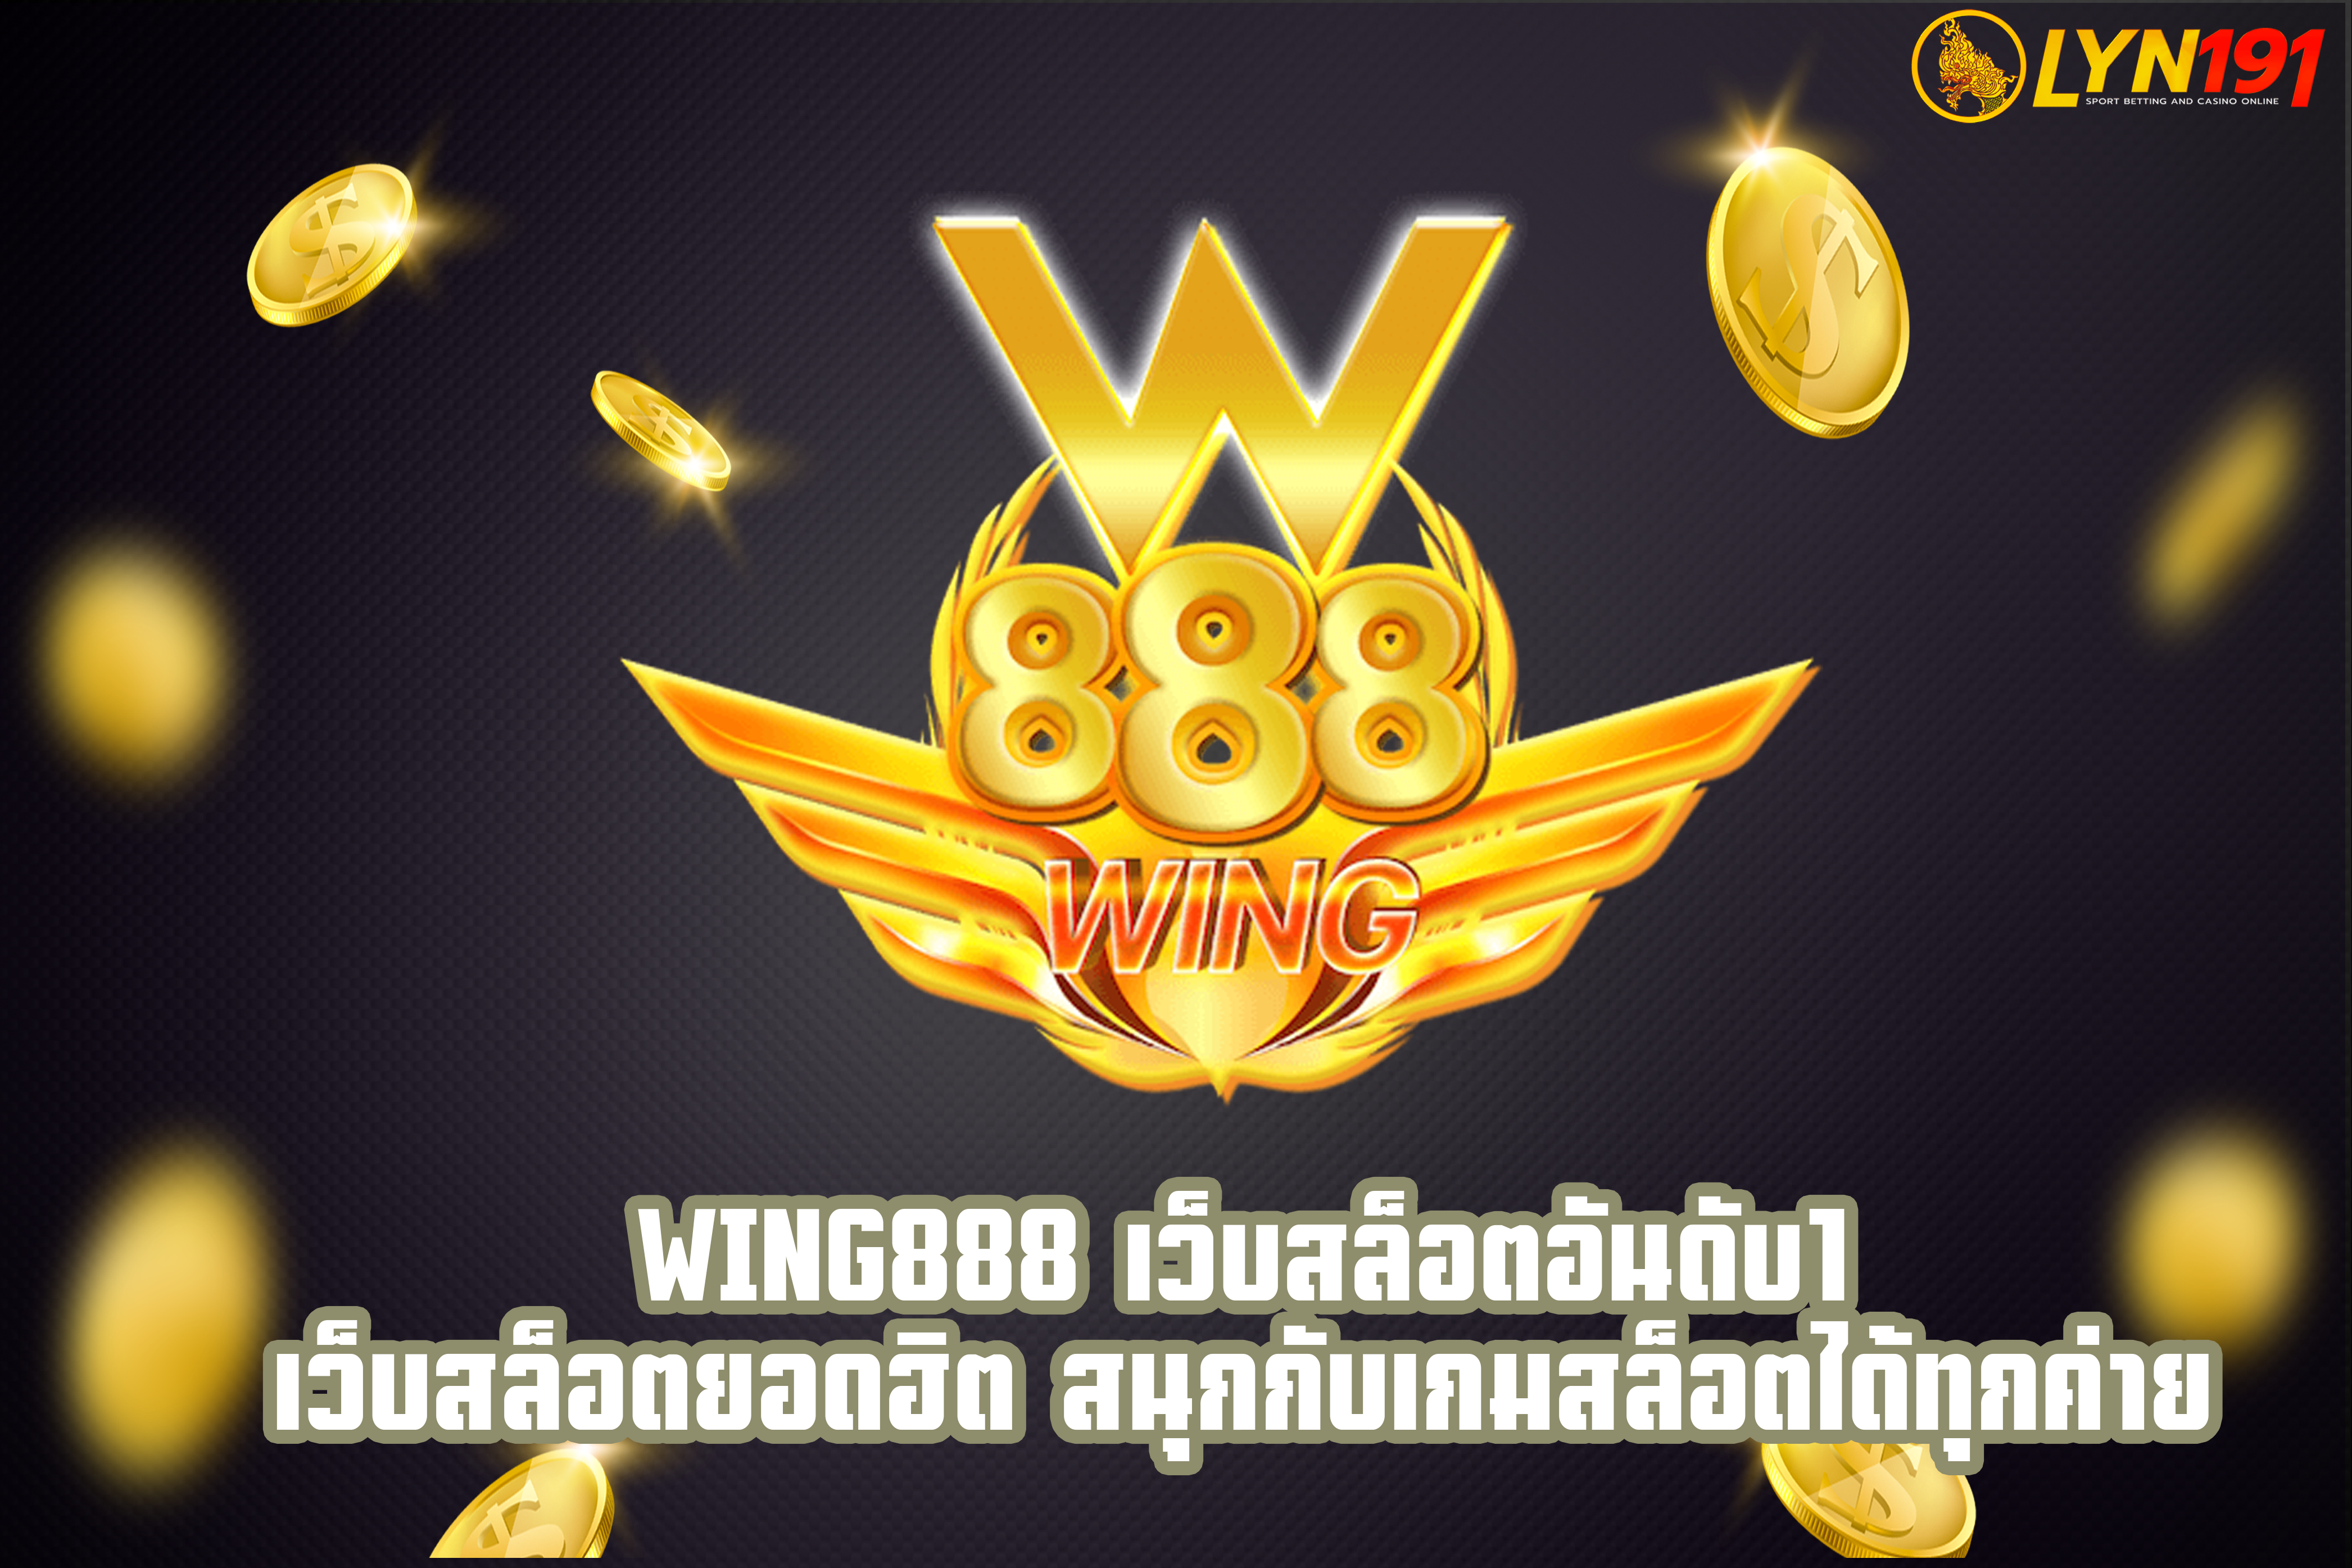 Wing888